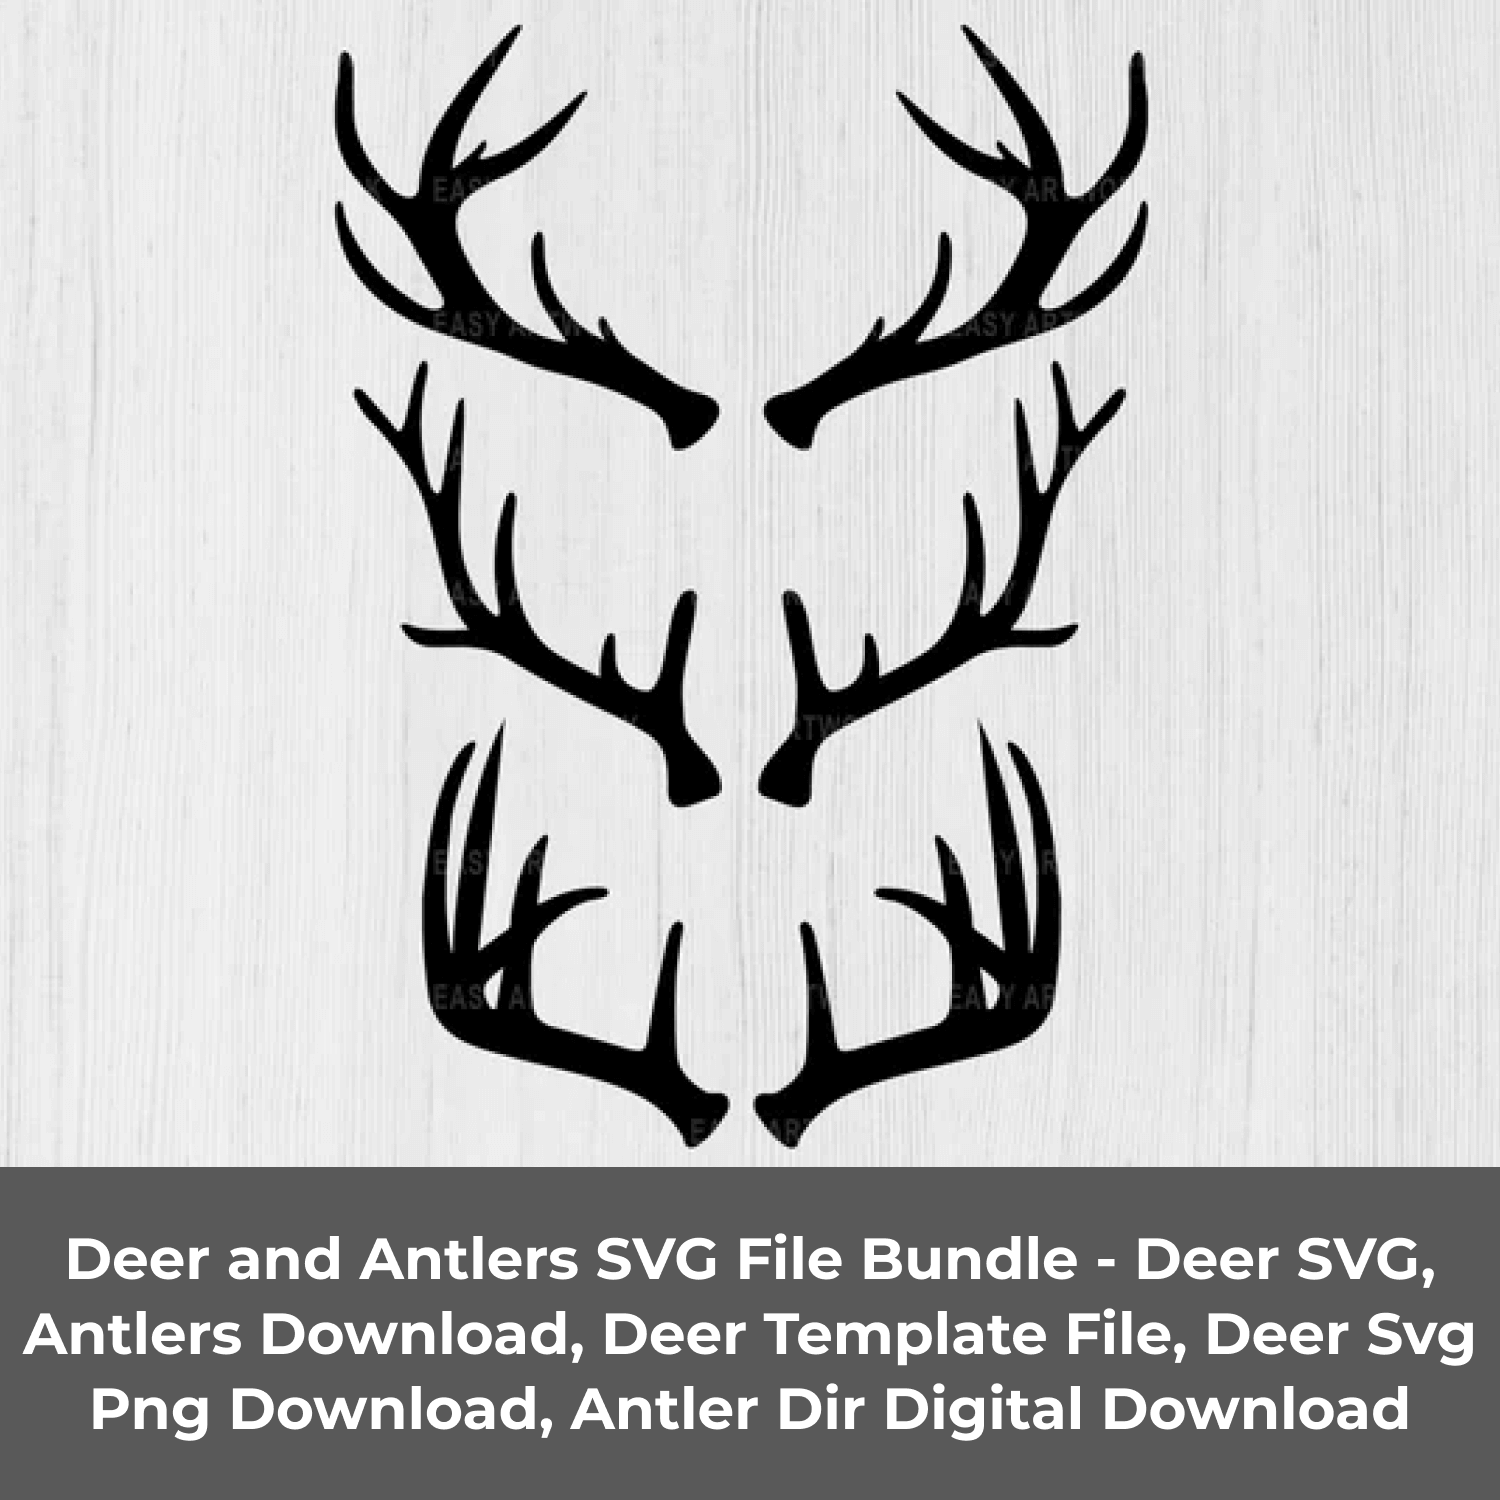 02 Deer And Antlers Svg File Bundle Deer Svg Antlers Download Deer Template File Deer Svg Png Download Antler Dir Digital Download 1500x1500 1 